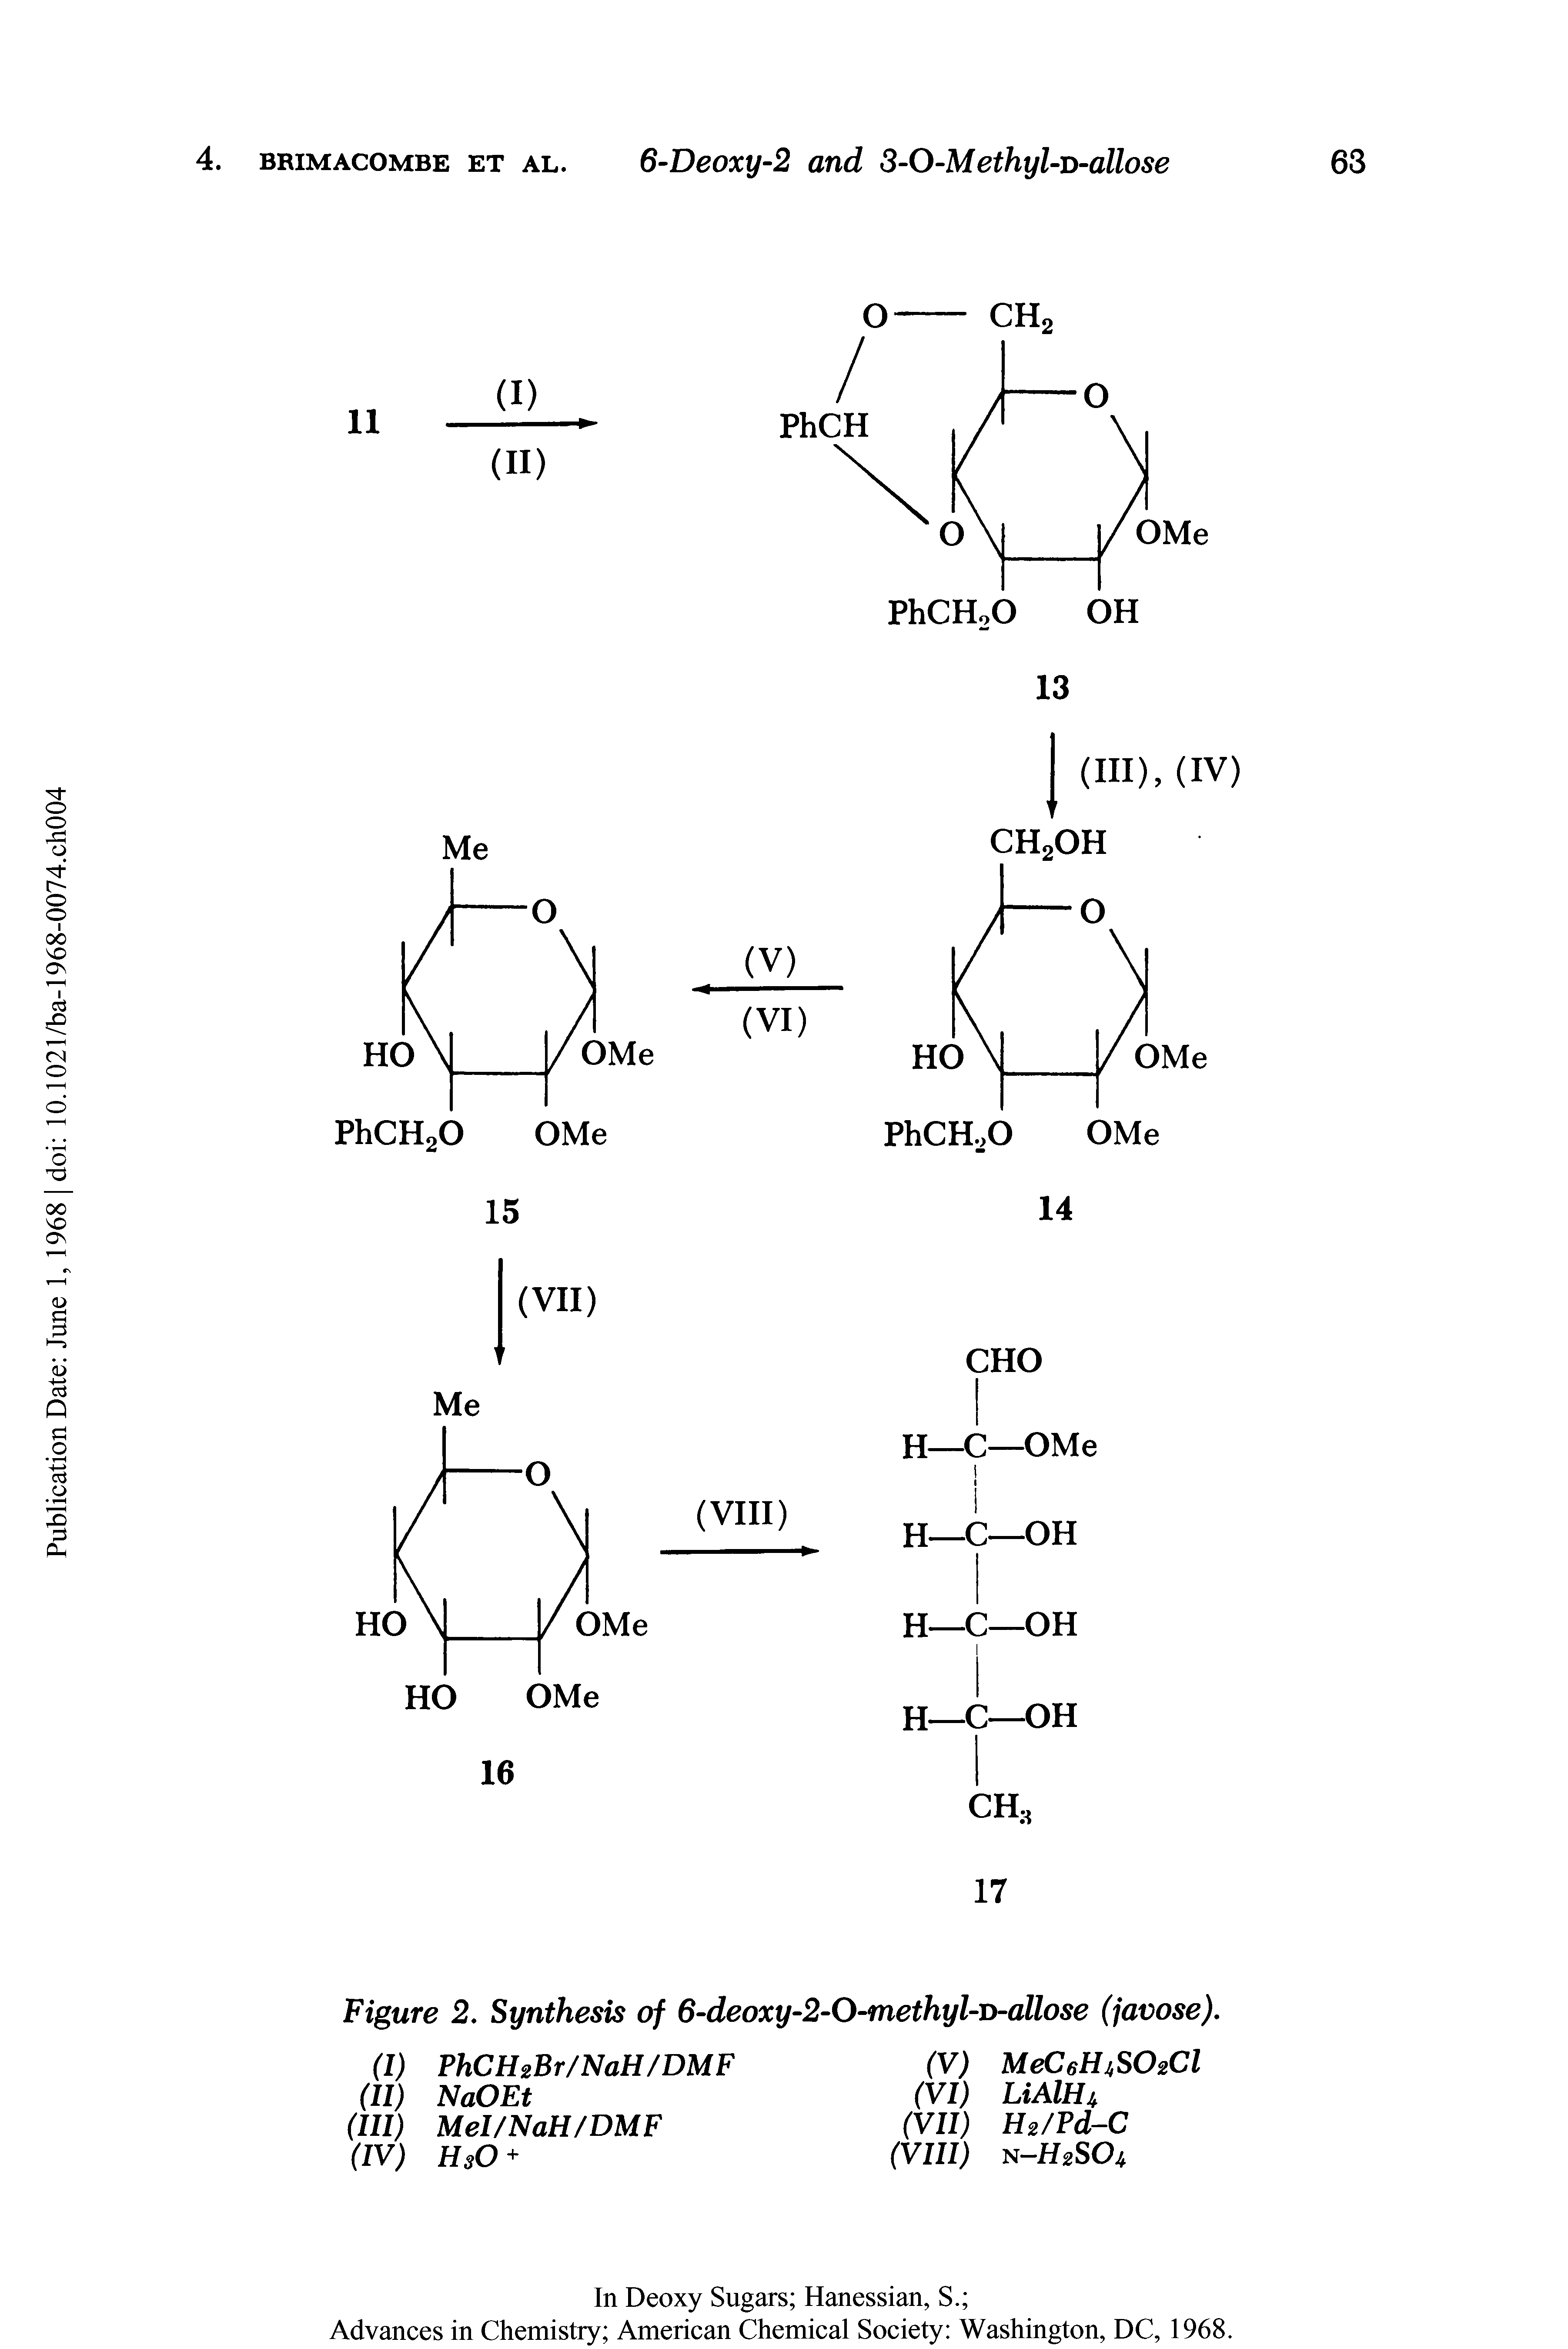 Figure 2. Synthesis of 6-deoxy-2-0-methyl-D-allose (javose).